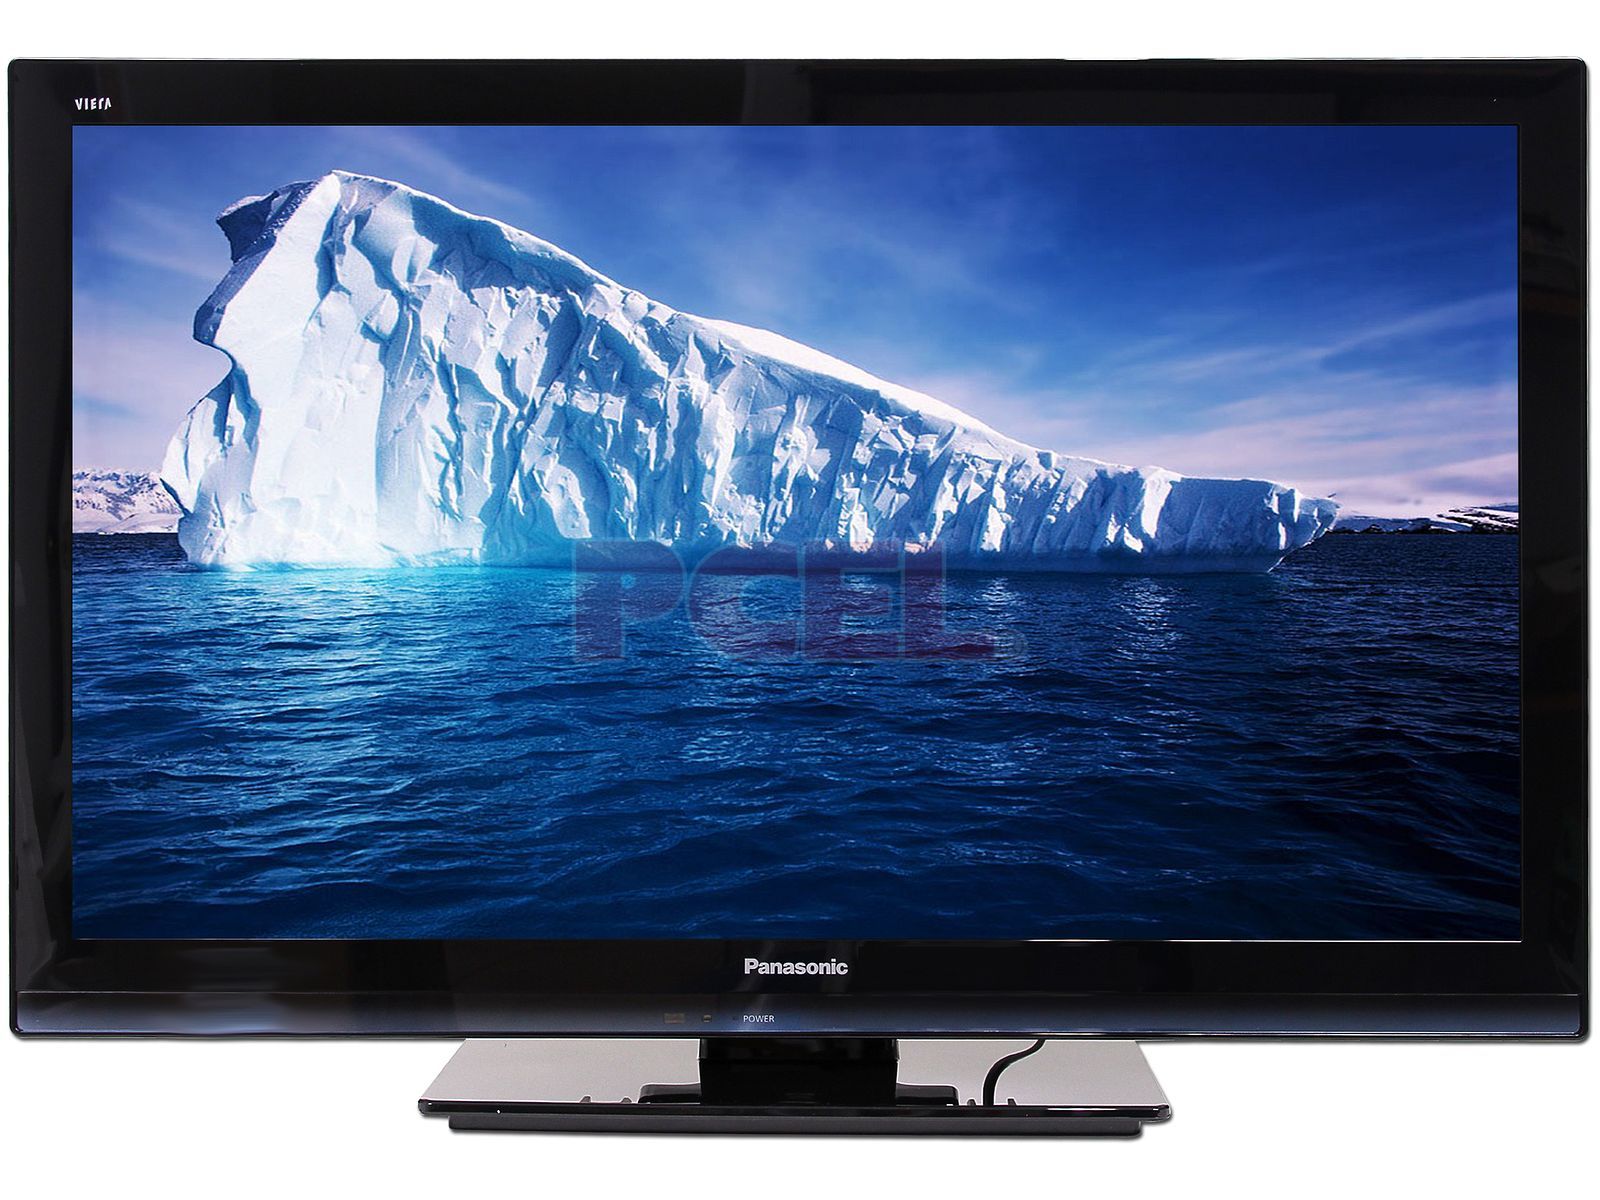  Classic - Mando a distancia para televisor Panasonic Viera  TC-L22X2 TC-L32C22 (LCD, Full HD, HDTV) : Electrónica